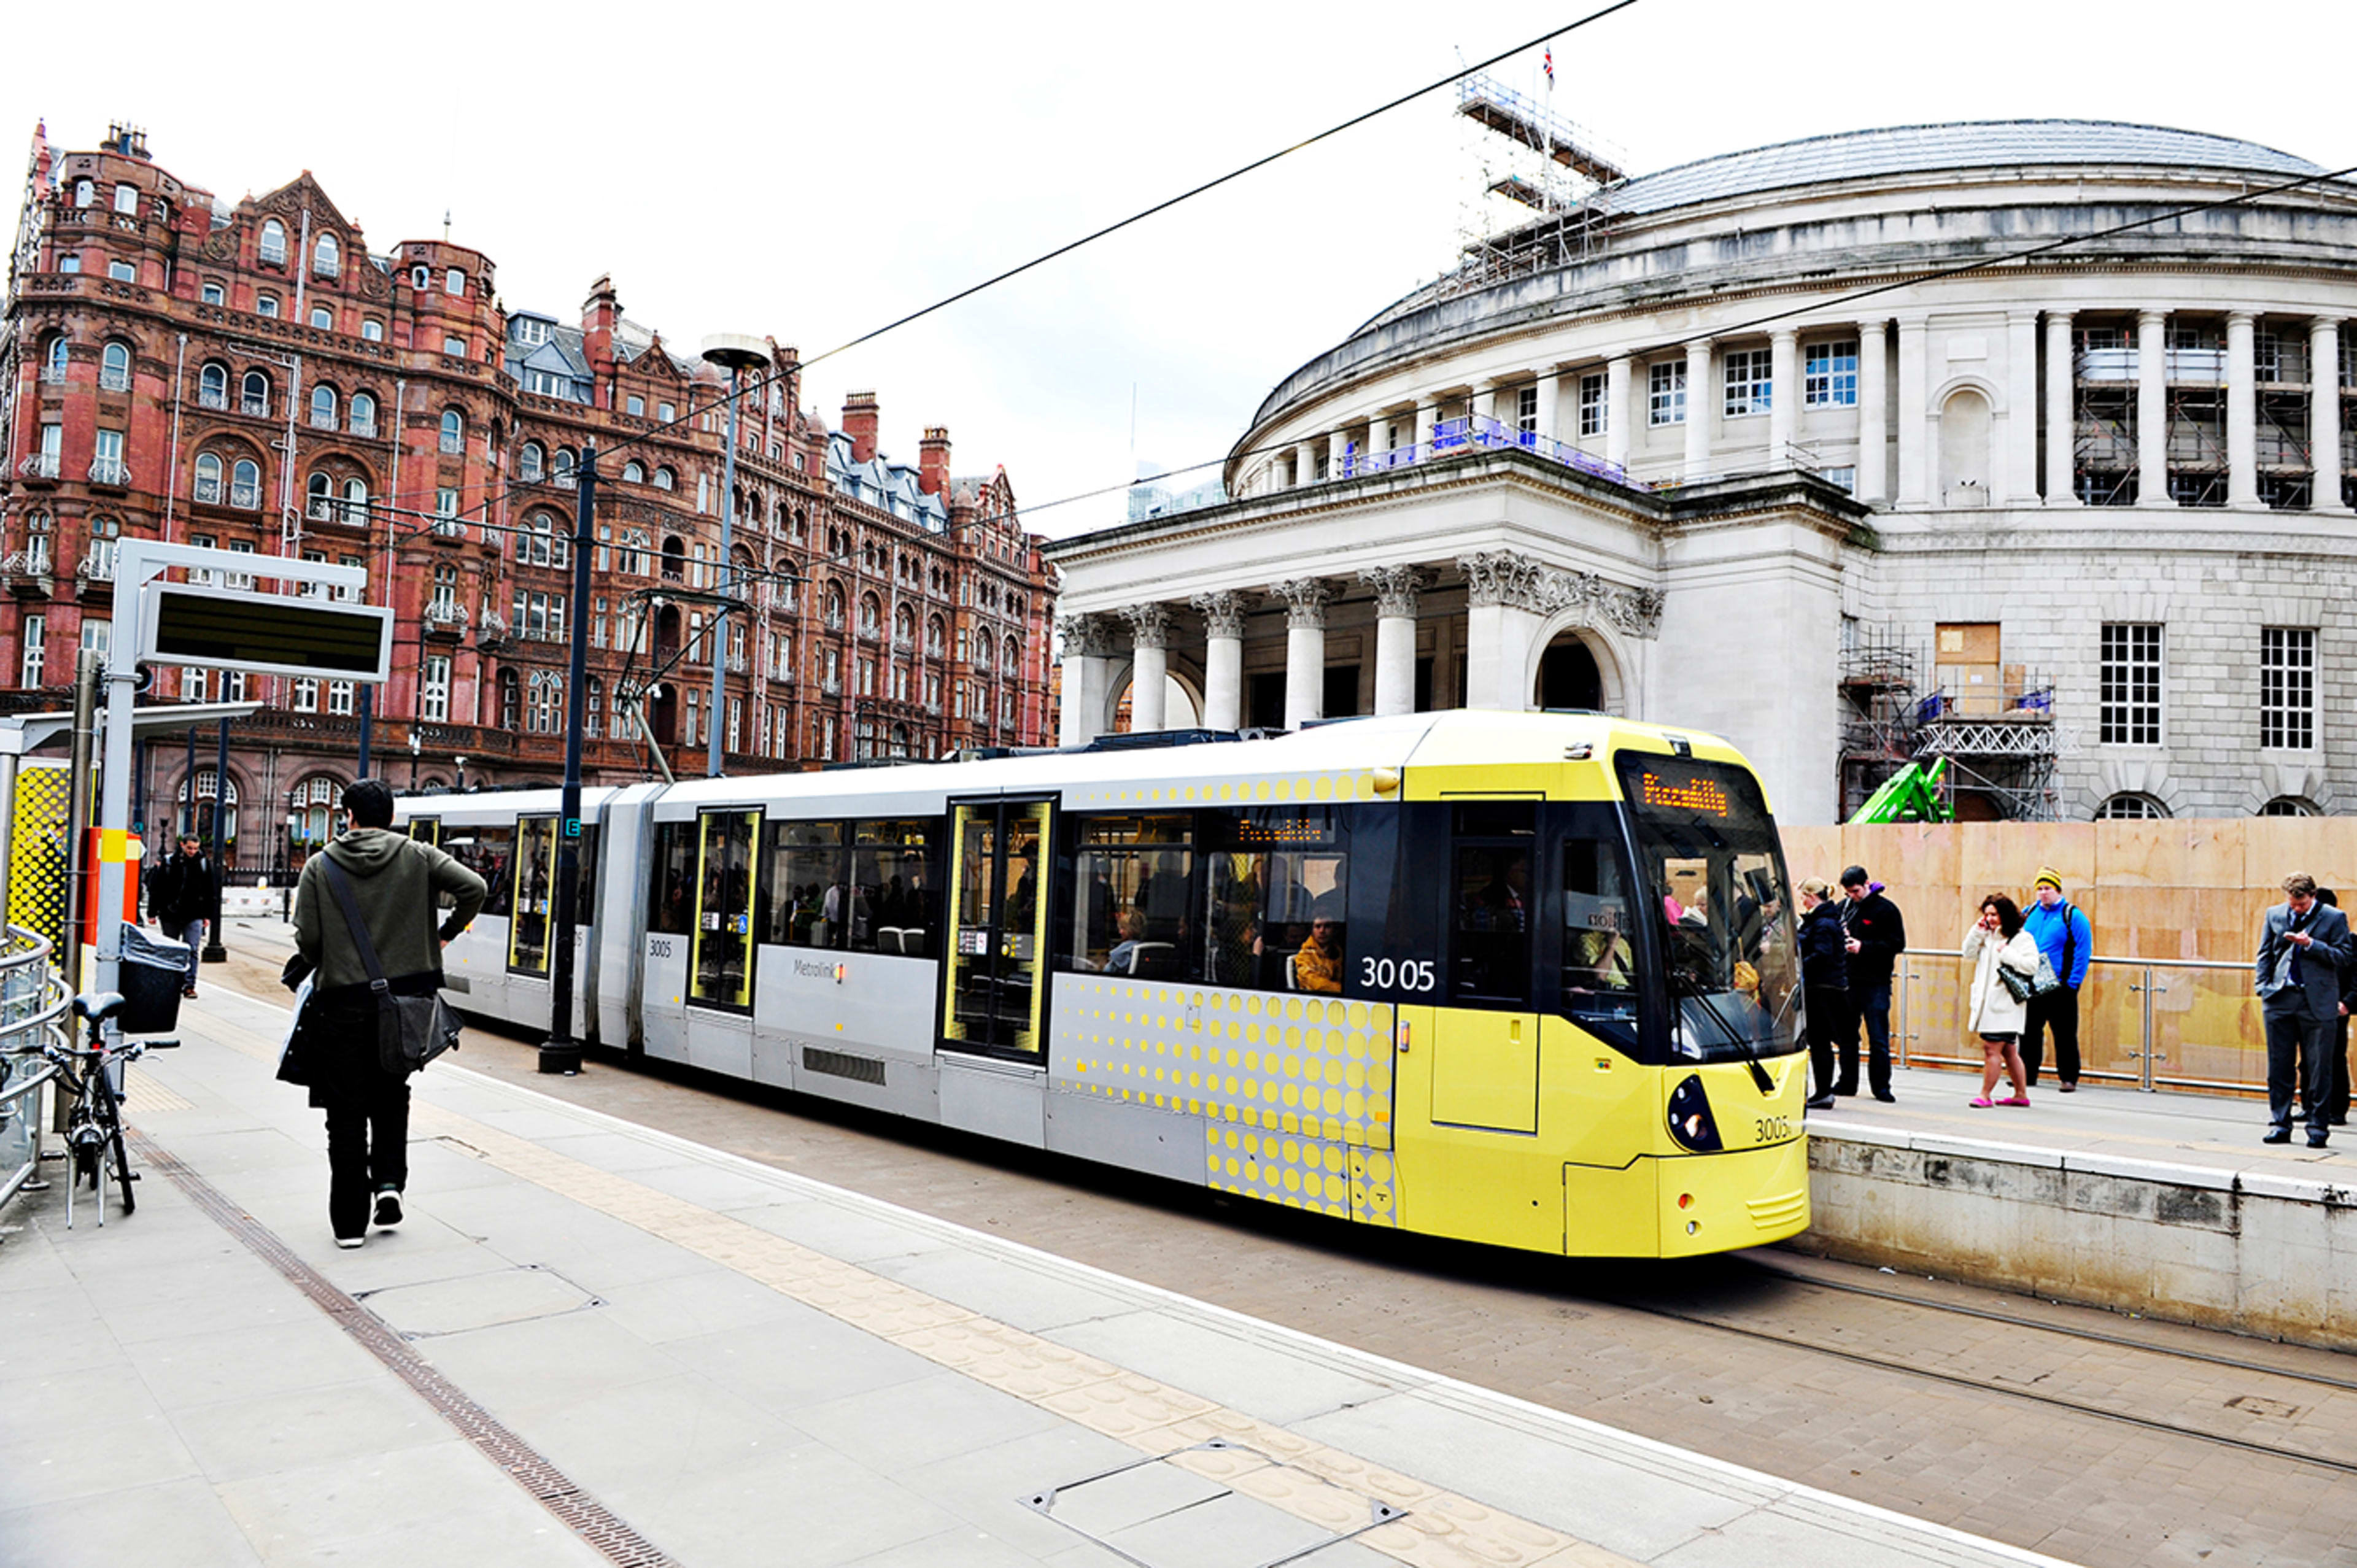 Manchester's convenient tram network